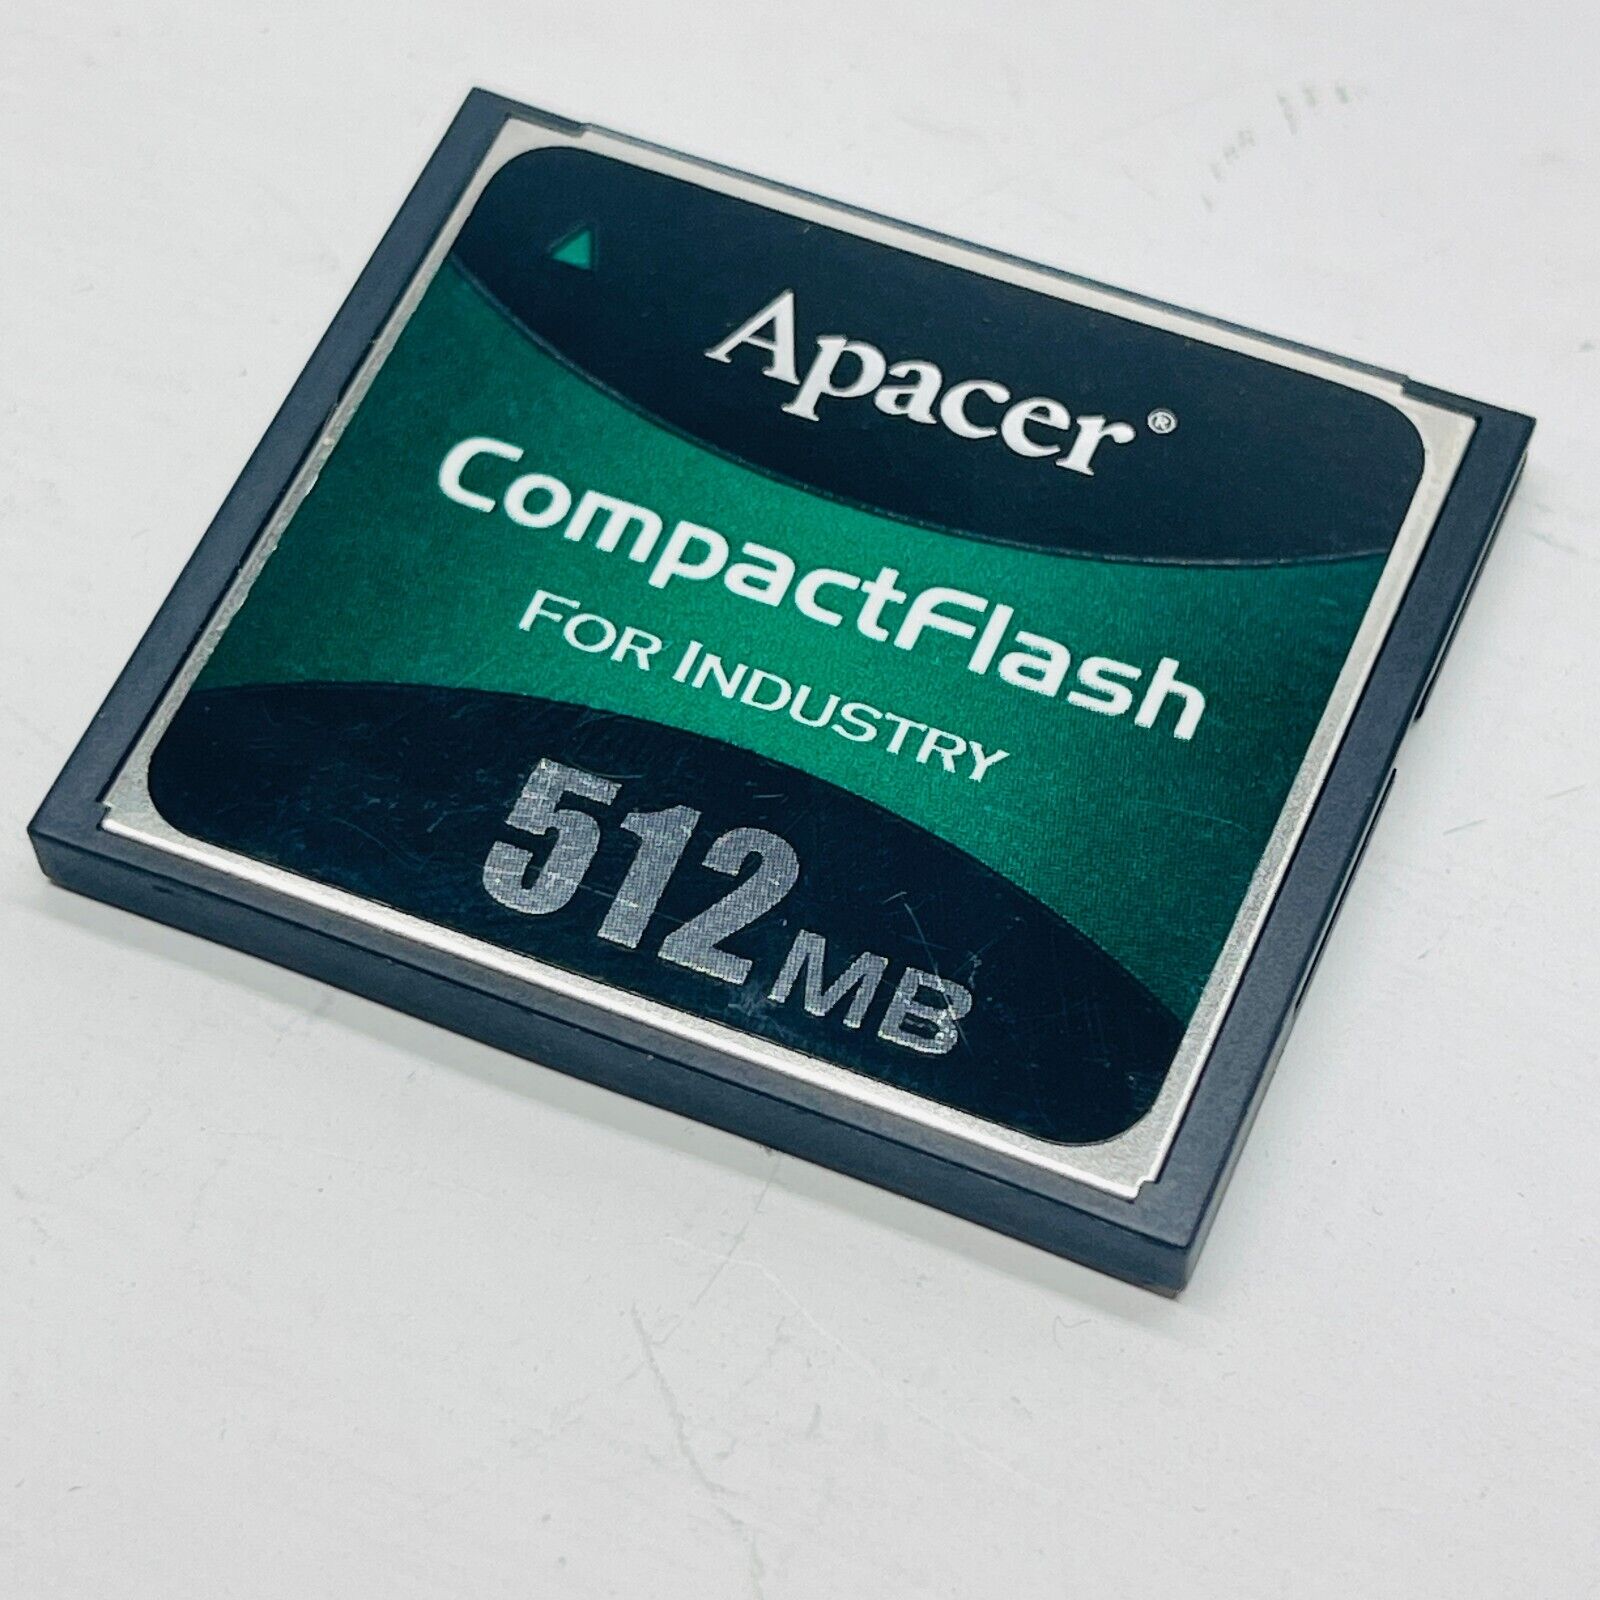 96FMCFI-512-CT-AP1 Apacer 81.2AL20.V108B 512 MB Compact Flash, For Industrial